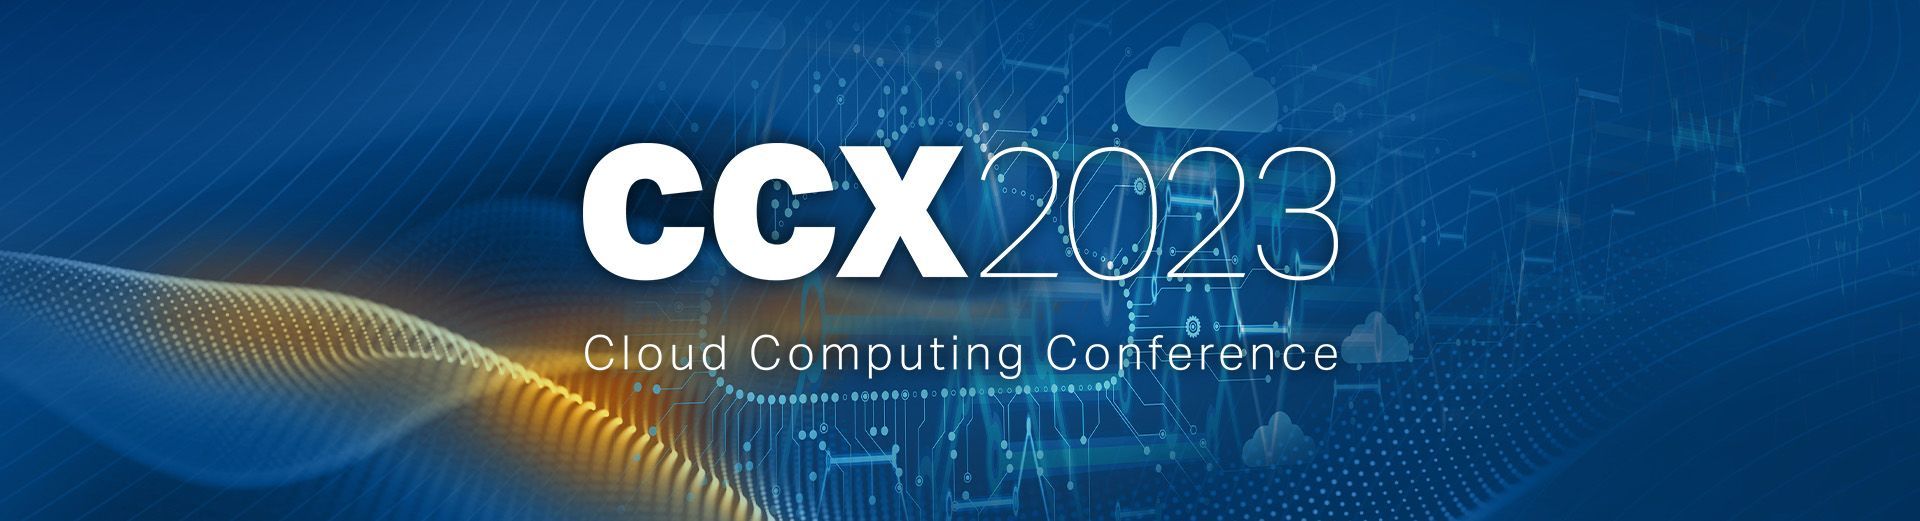 CCX Cloud Computing Virtual Conference 2021 Header